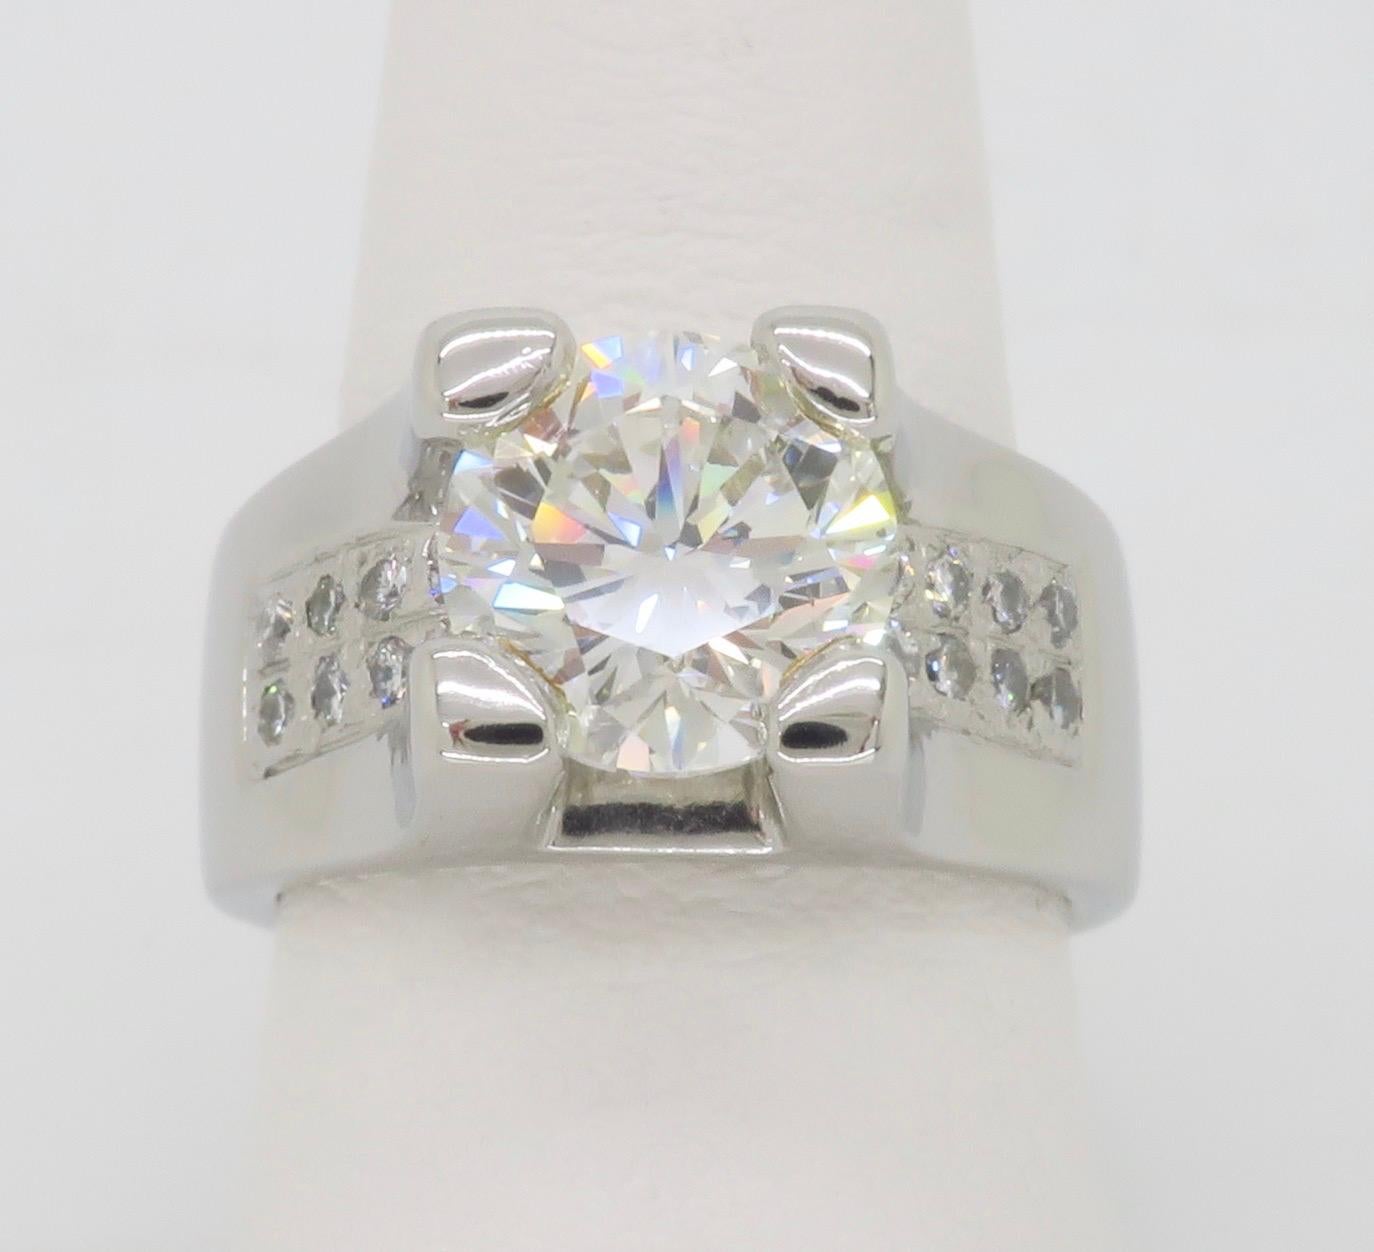 Stunning 3.36CTW Certified Diamond ring crafted in Platinum.

Center Diamond Carat Weight: 3.00CT
Center Diamond Cut: Round Brilliant Cut 
Center EGL Diamond Color: G
Center EGL Diamond Clarity: SI1
Certification: EGL LA: LA220800944
Total Diamond